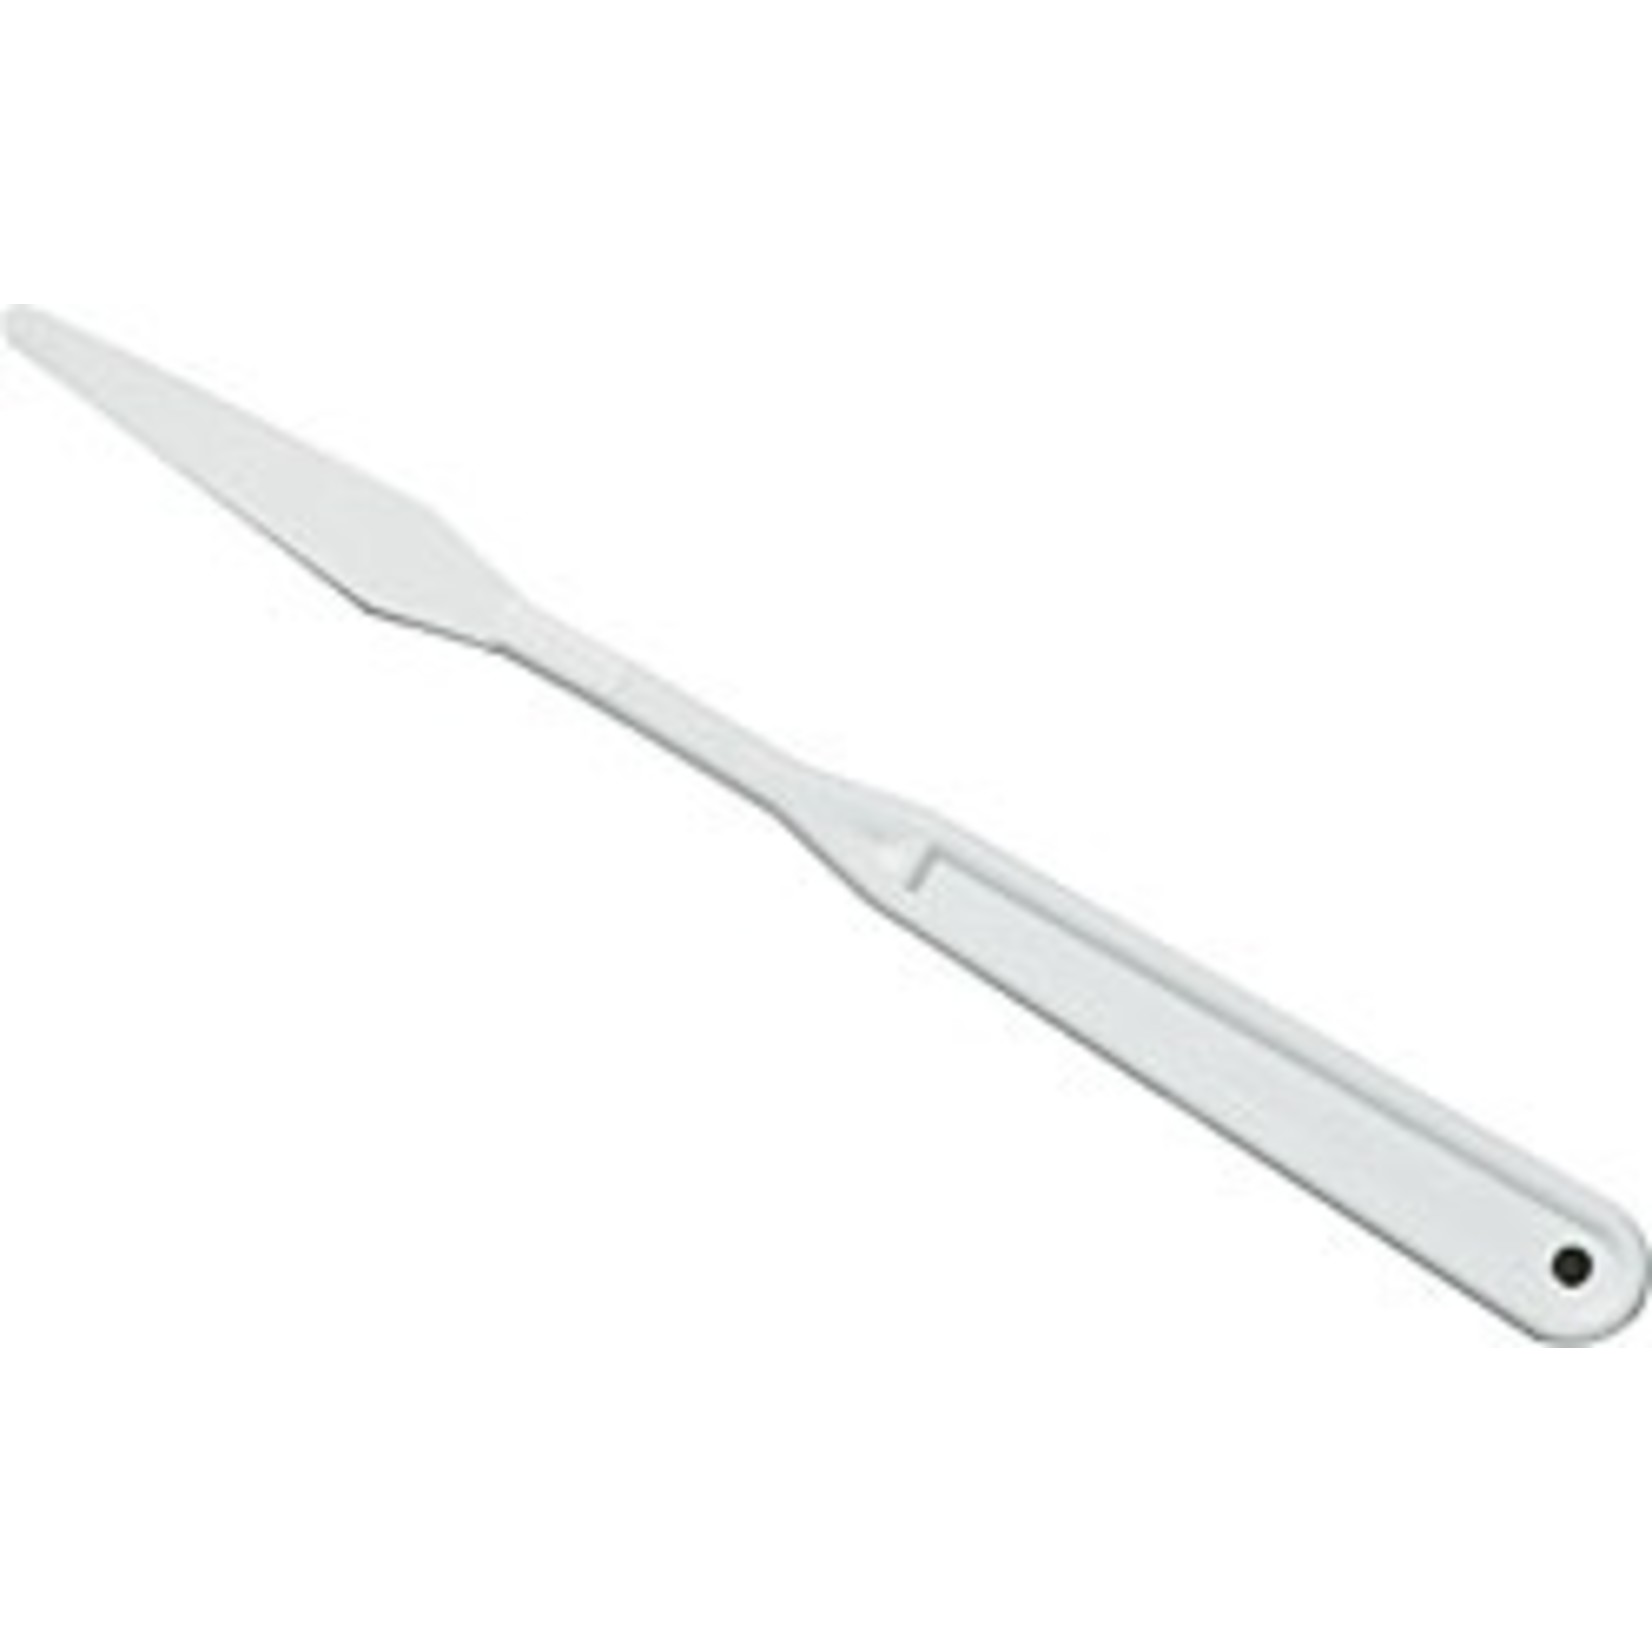 PRO ART PLASTIC PALETTE KNIFE   2-3/8 INCH OFFSET TROWEL    6960-5